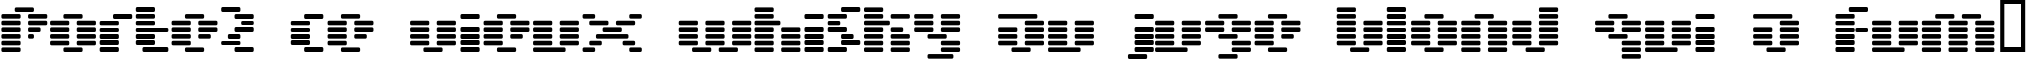 Пример написания шрифтом BN Moog Boy текста на французском